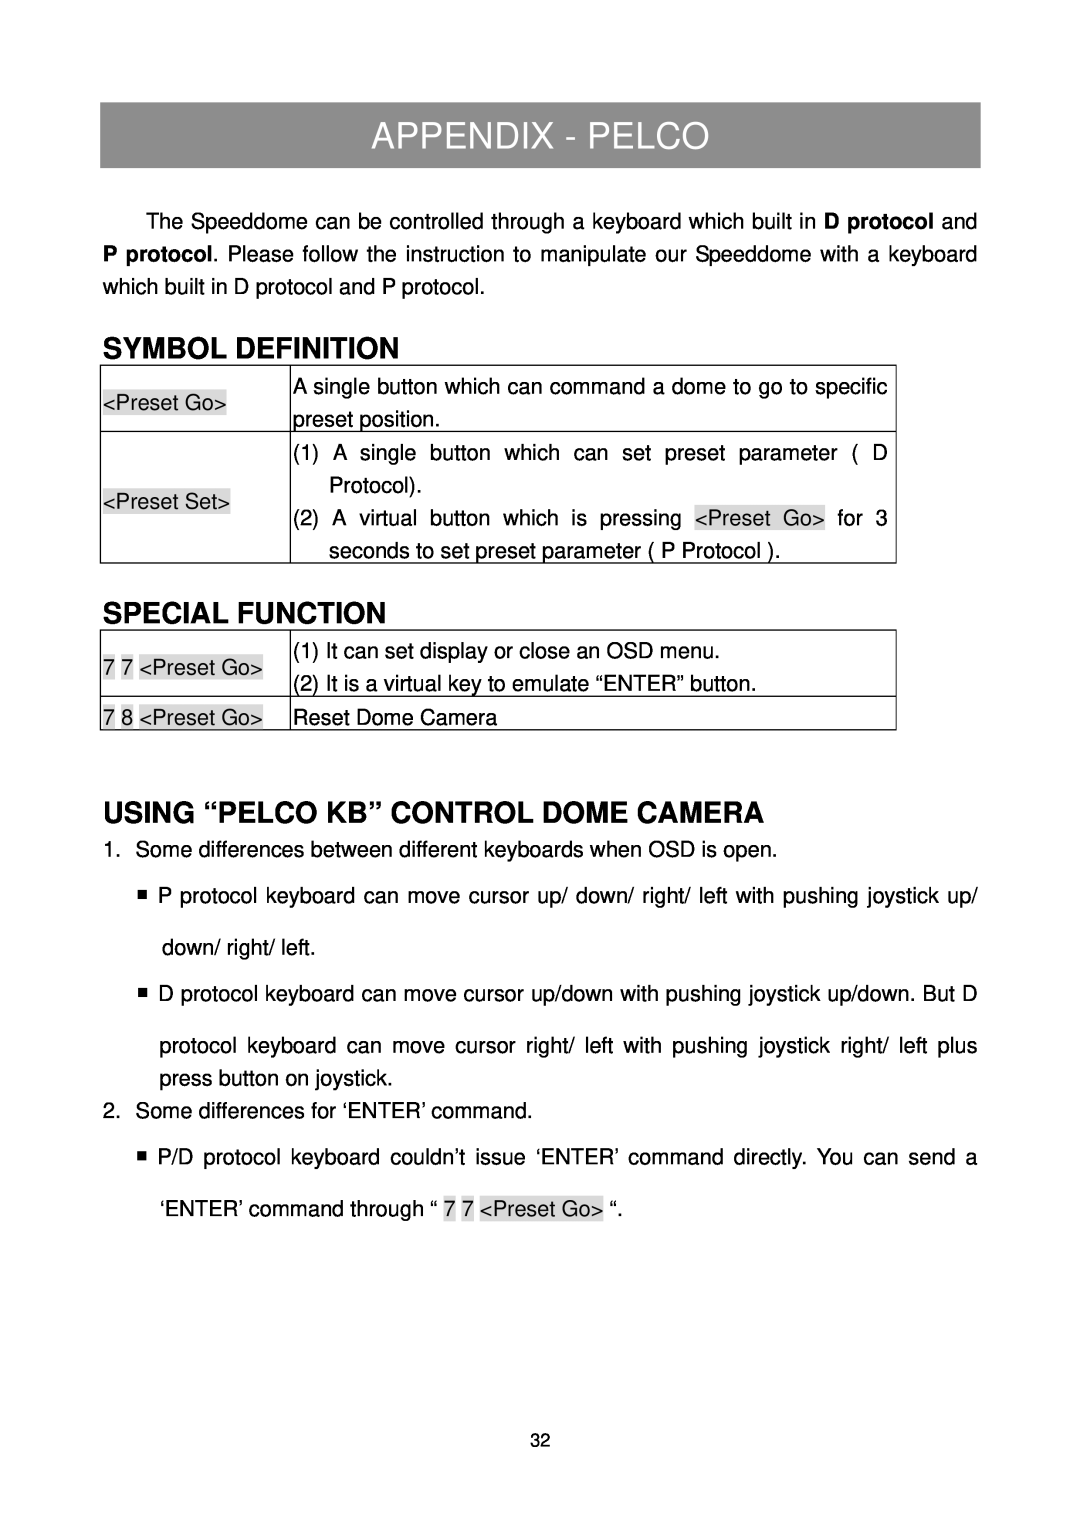 Elmo ESD-380 user manual Appendix - Pelco, Symbol Definition, Special Function, Using “Pelco Kb” Control Dome Camera 